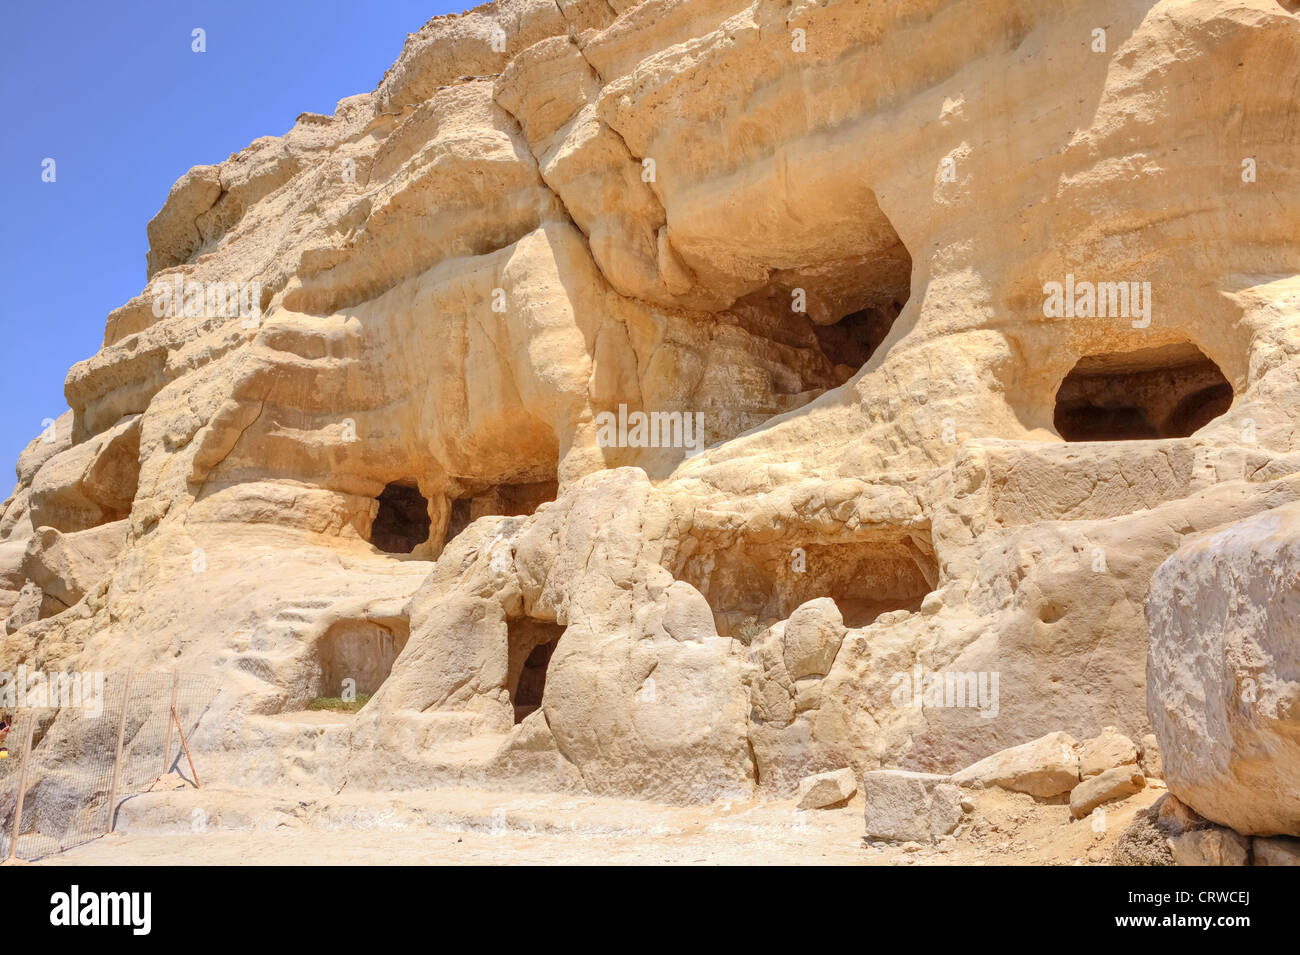 Höhlen von Matala, Pitsidia, Kreta, Griechenland Stockfoto